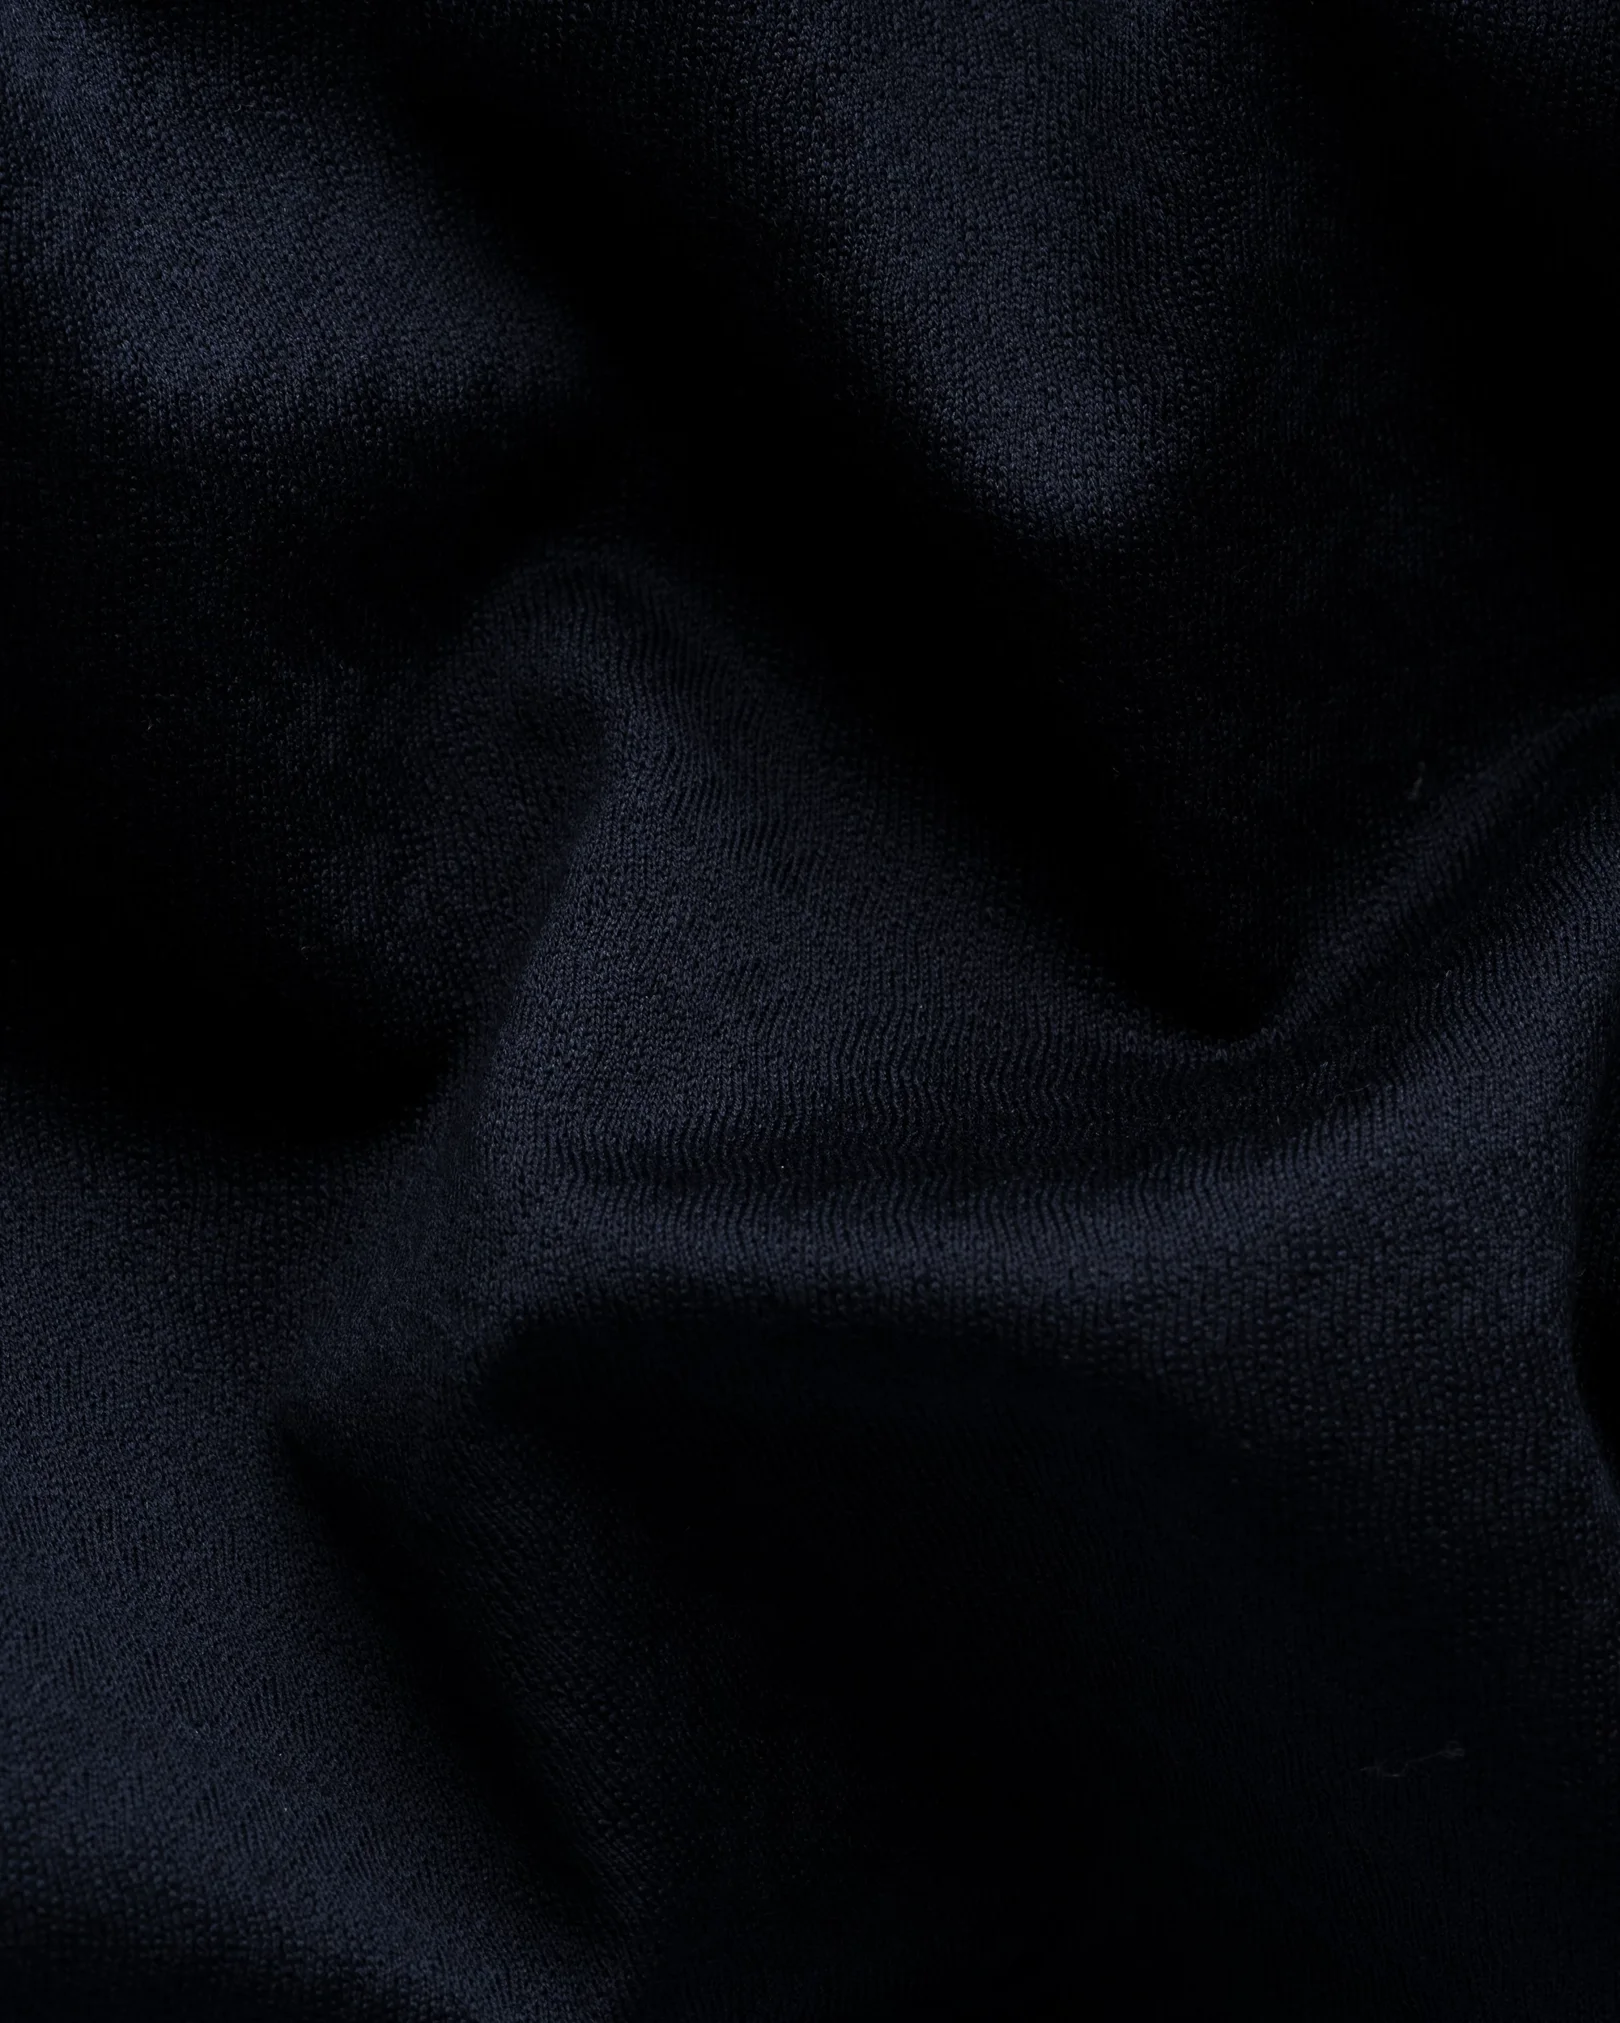 Eton - Navy Zig Zag Filo di Scozia Jacquard Polo Shirt